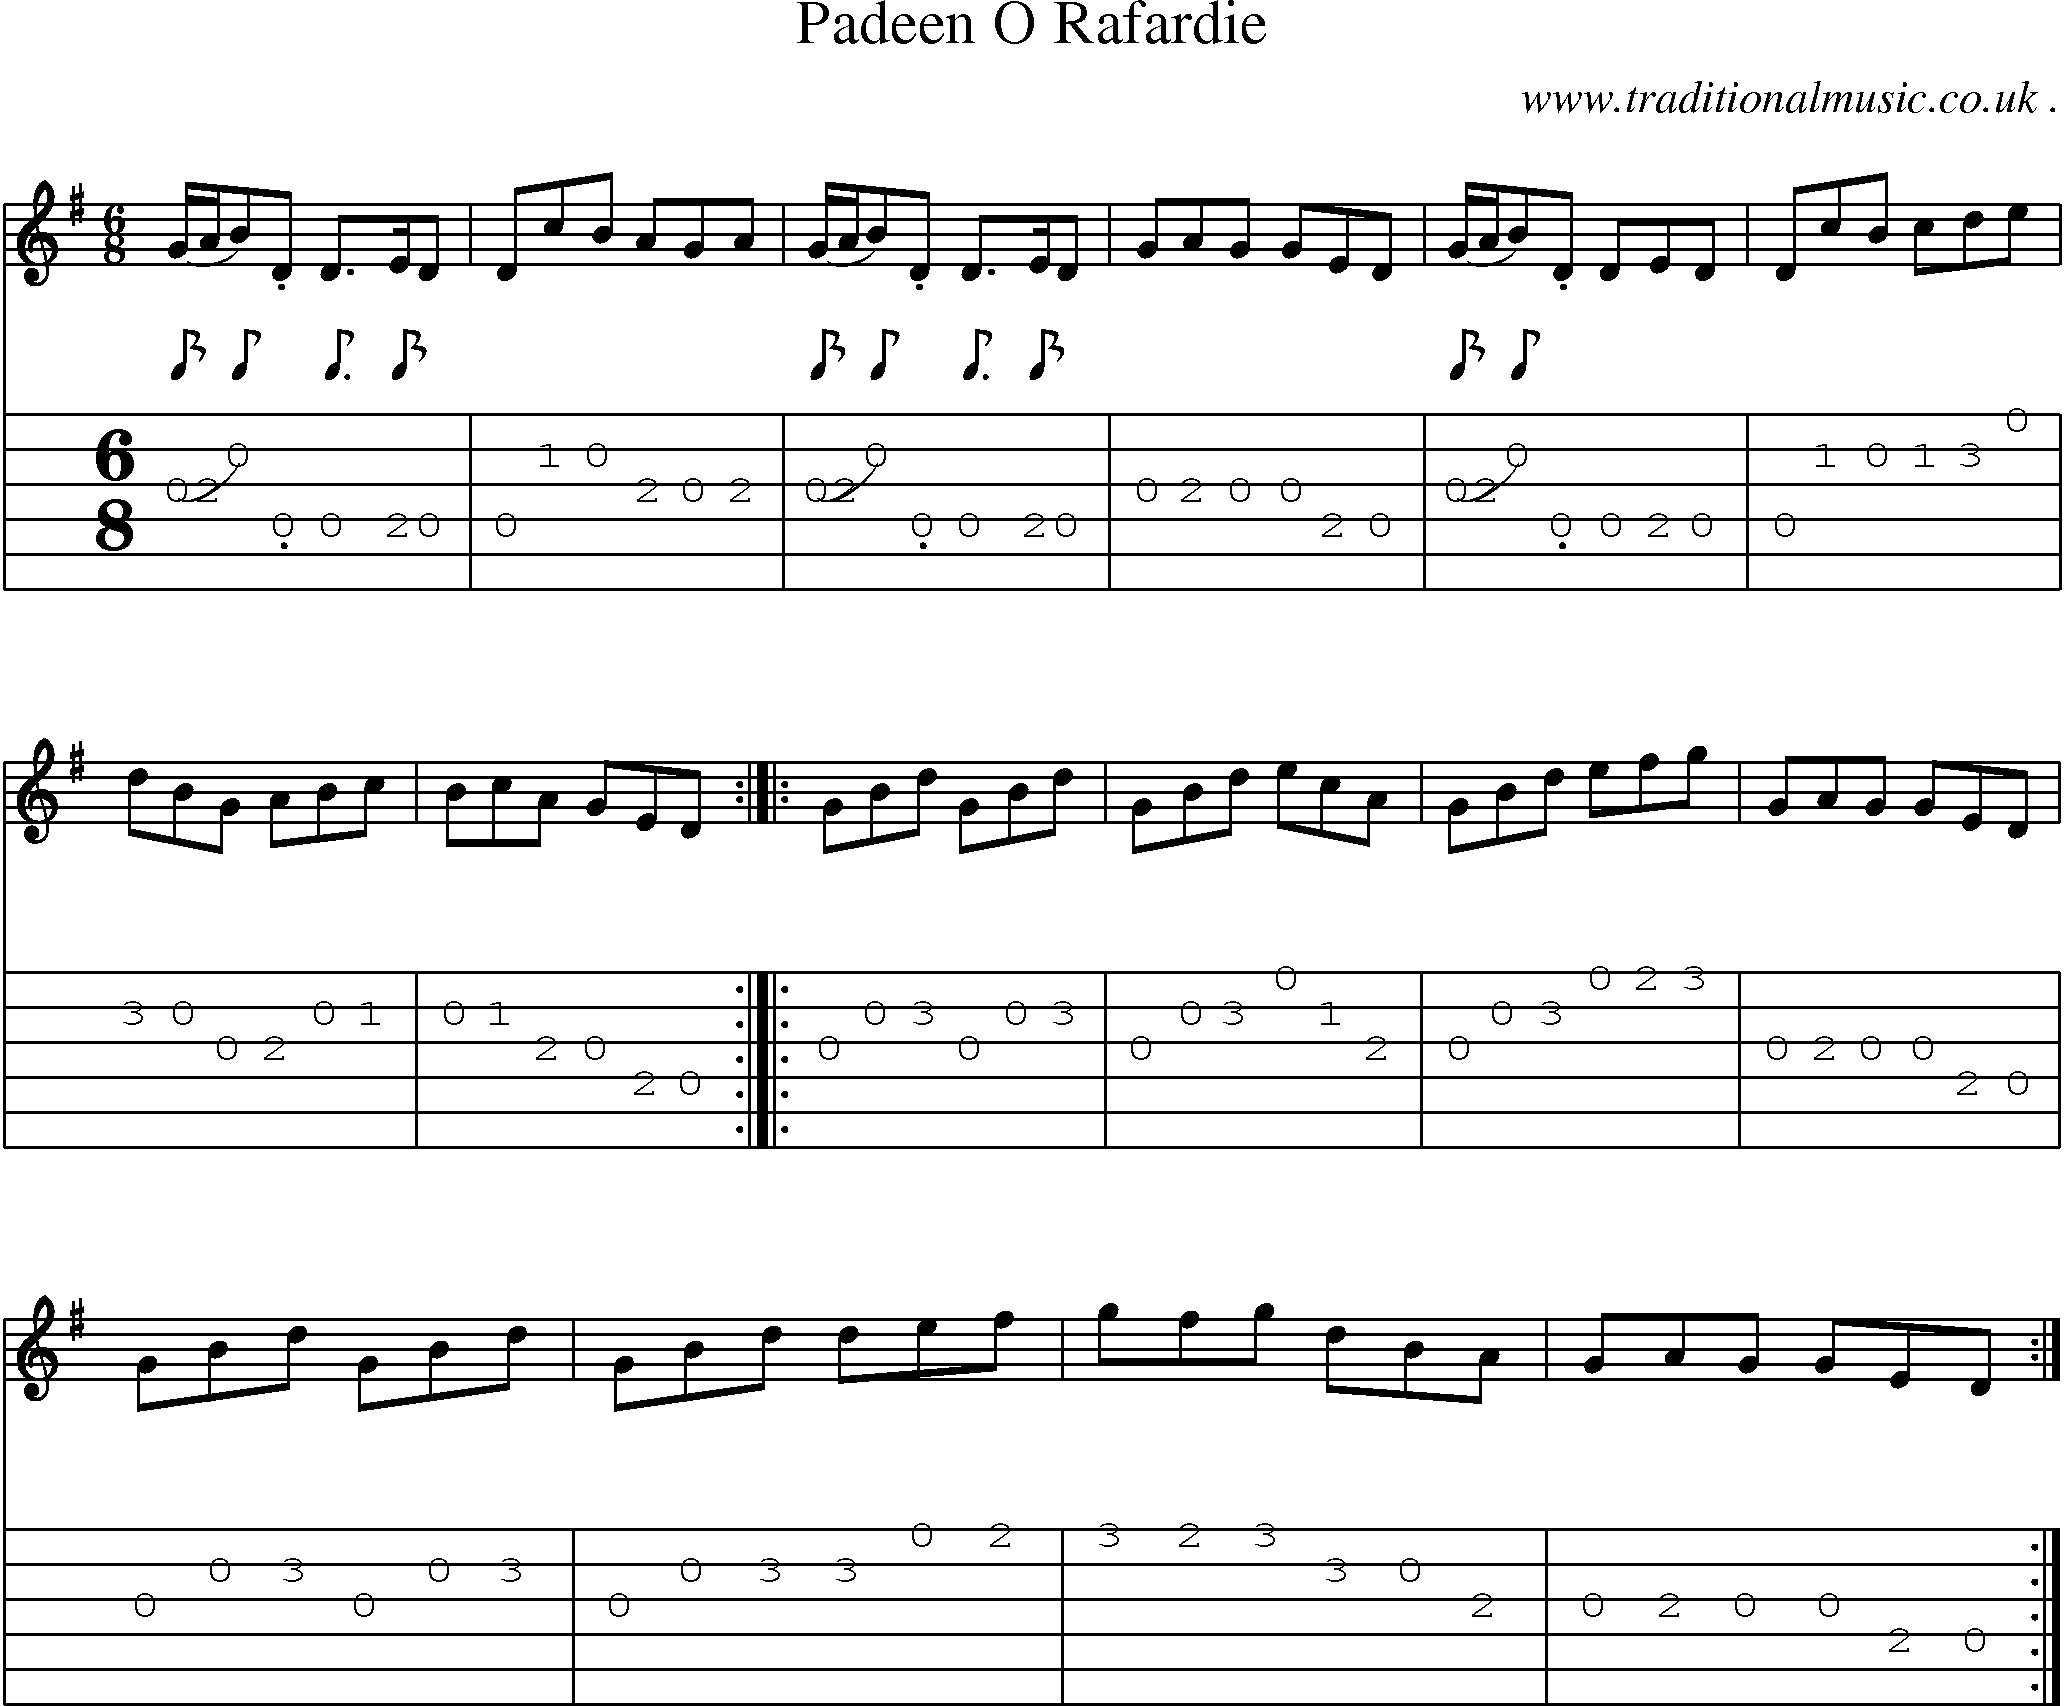 Sheet-Music and Guitar Tabs for Padeen O Rafardie